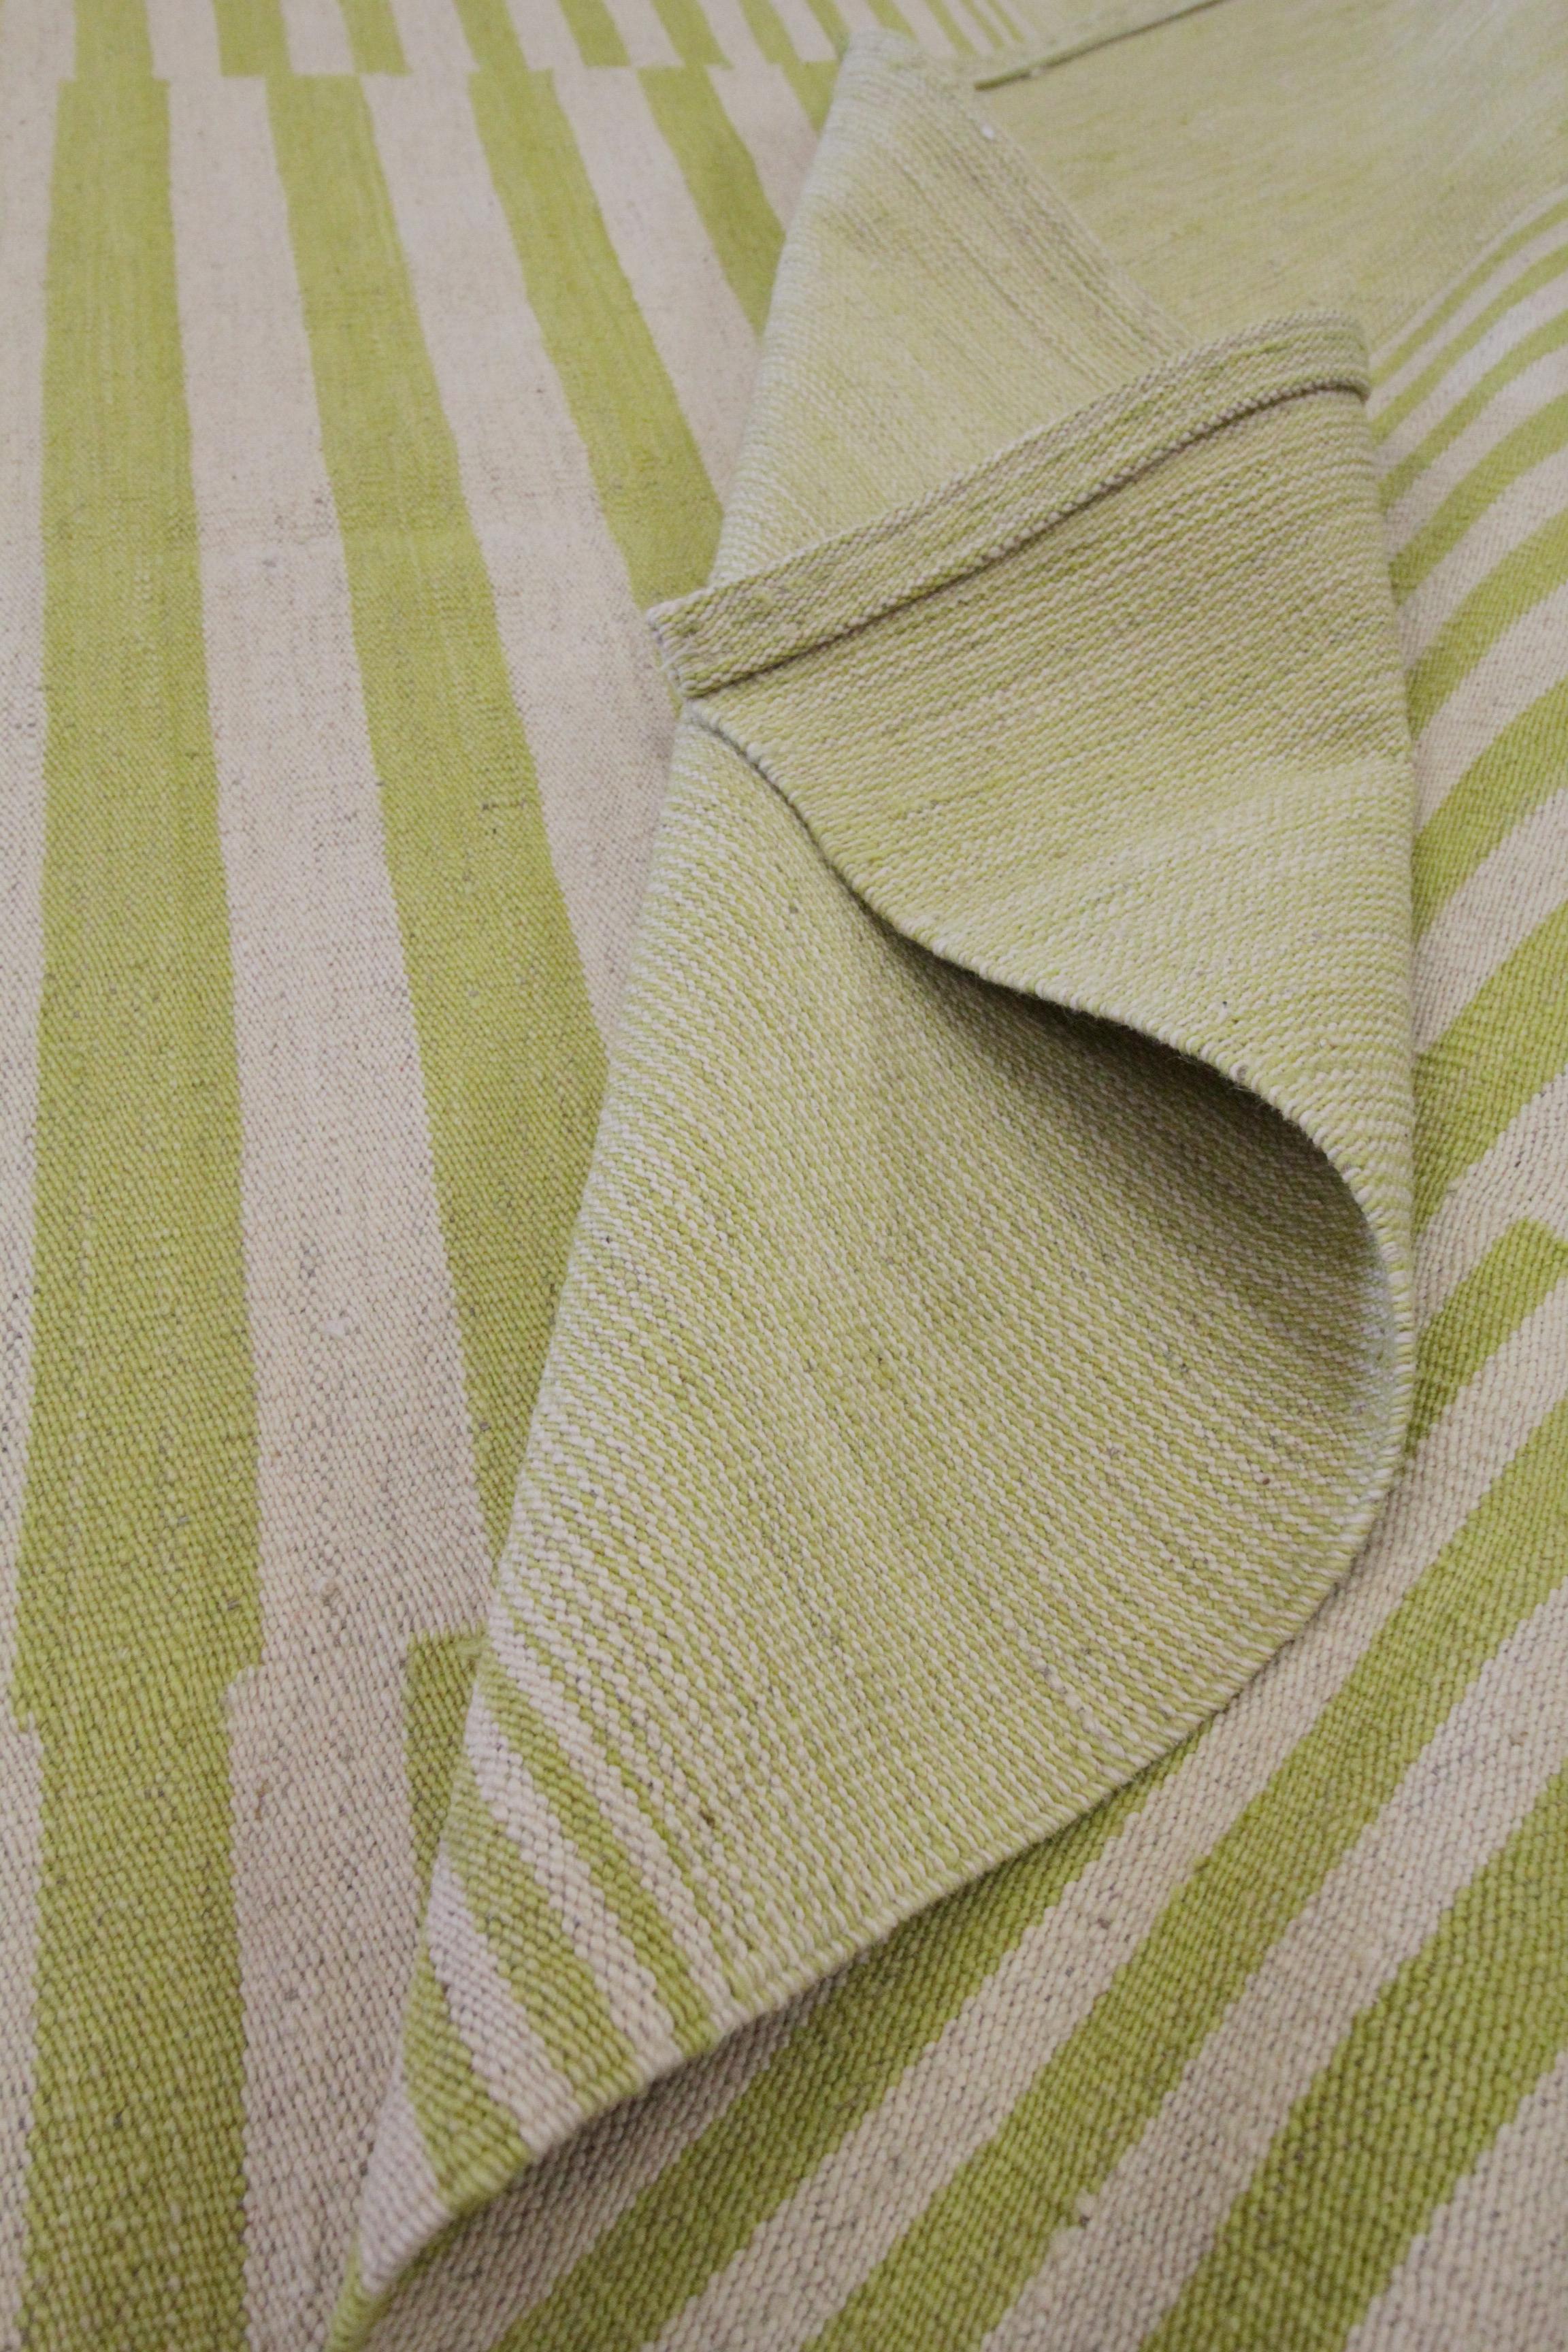 Modern Striped Kilim Rug Handmade Kelim Carpet Mustard Yellow Wool Area Rug For Sale 1